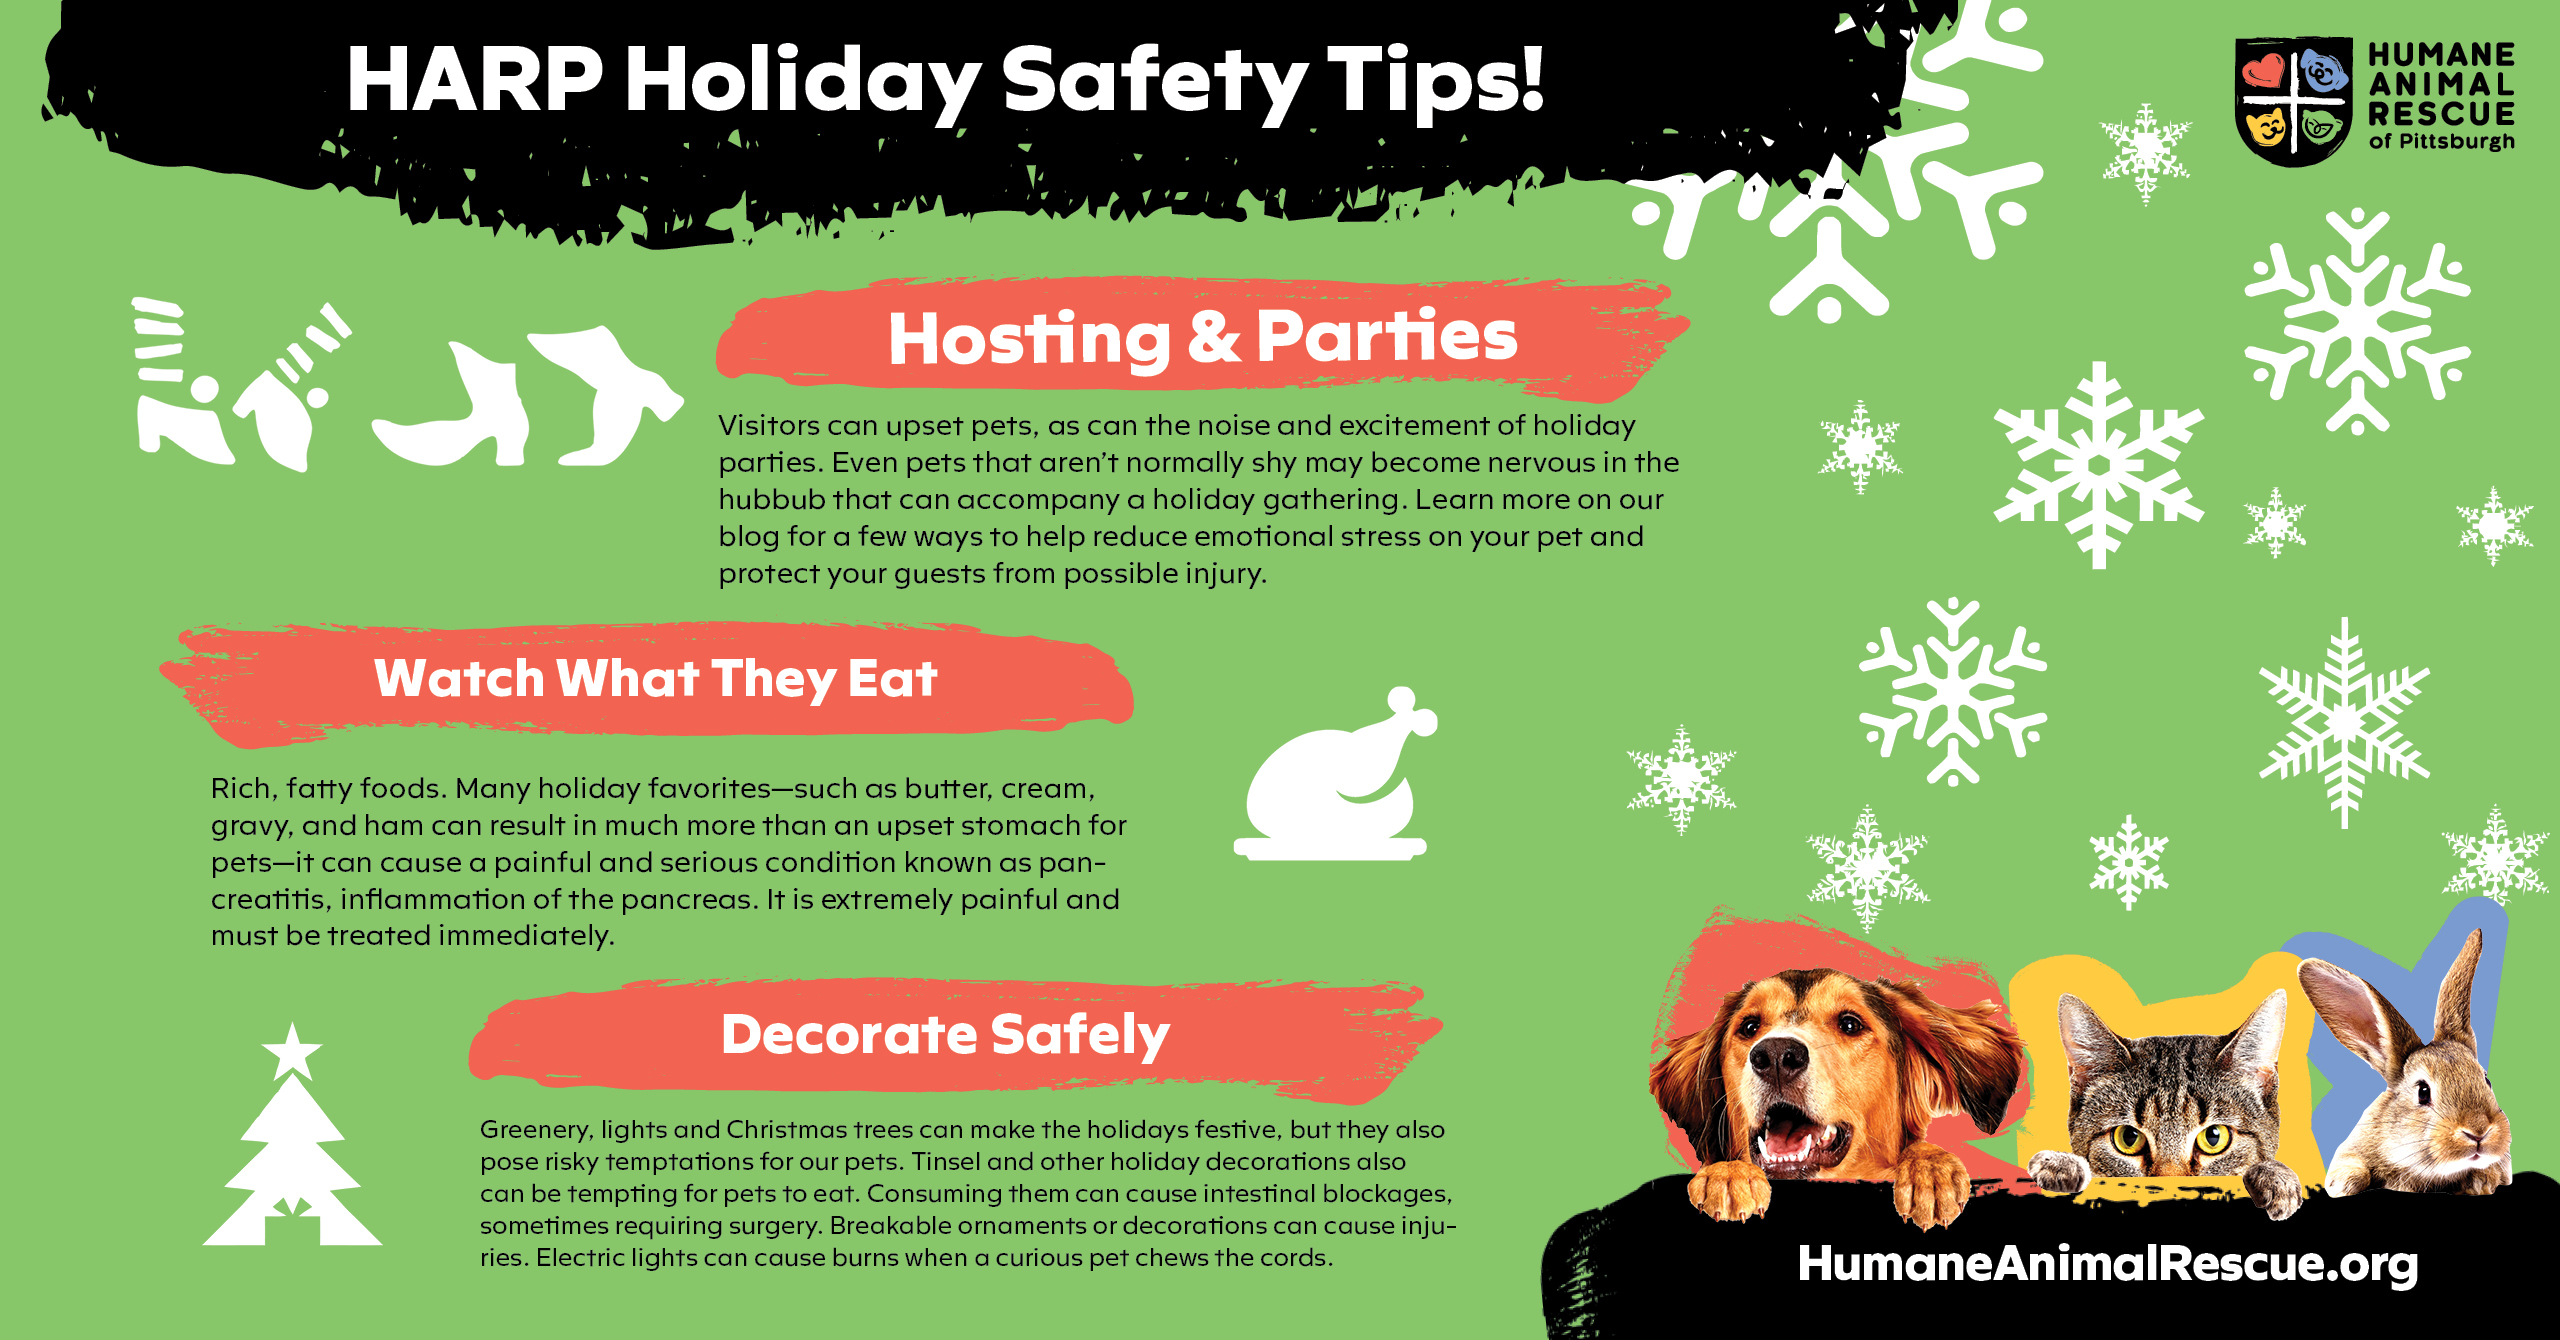 https://humaneanimalrescue.org/wp-content/uploads/2021/12/HARP_Holiday_Safety.jpg